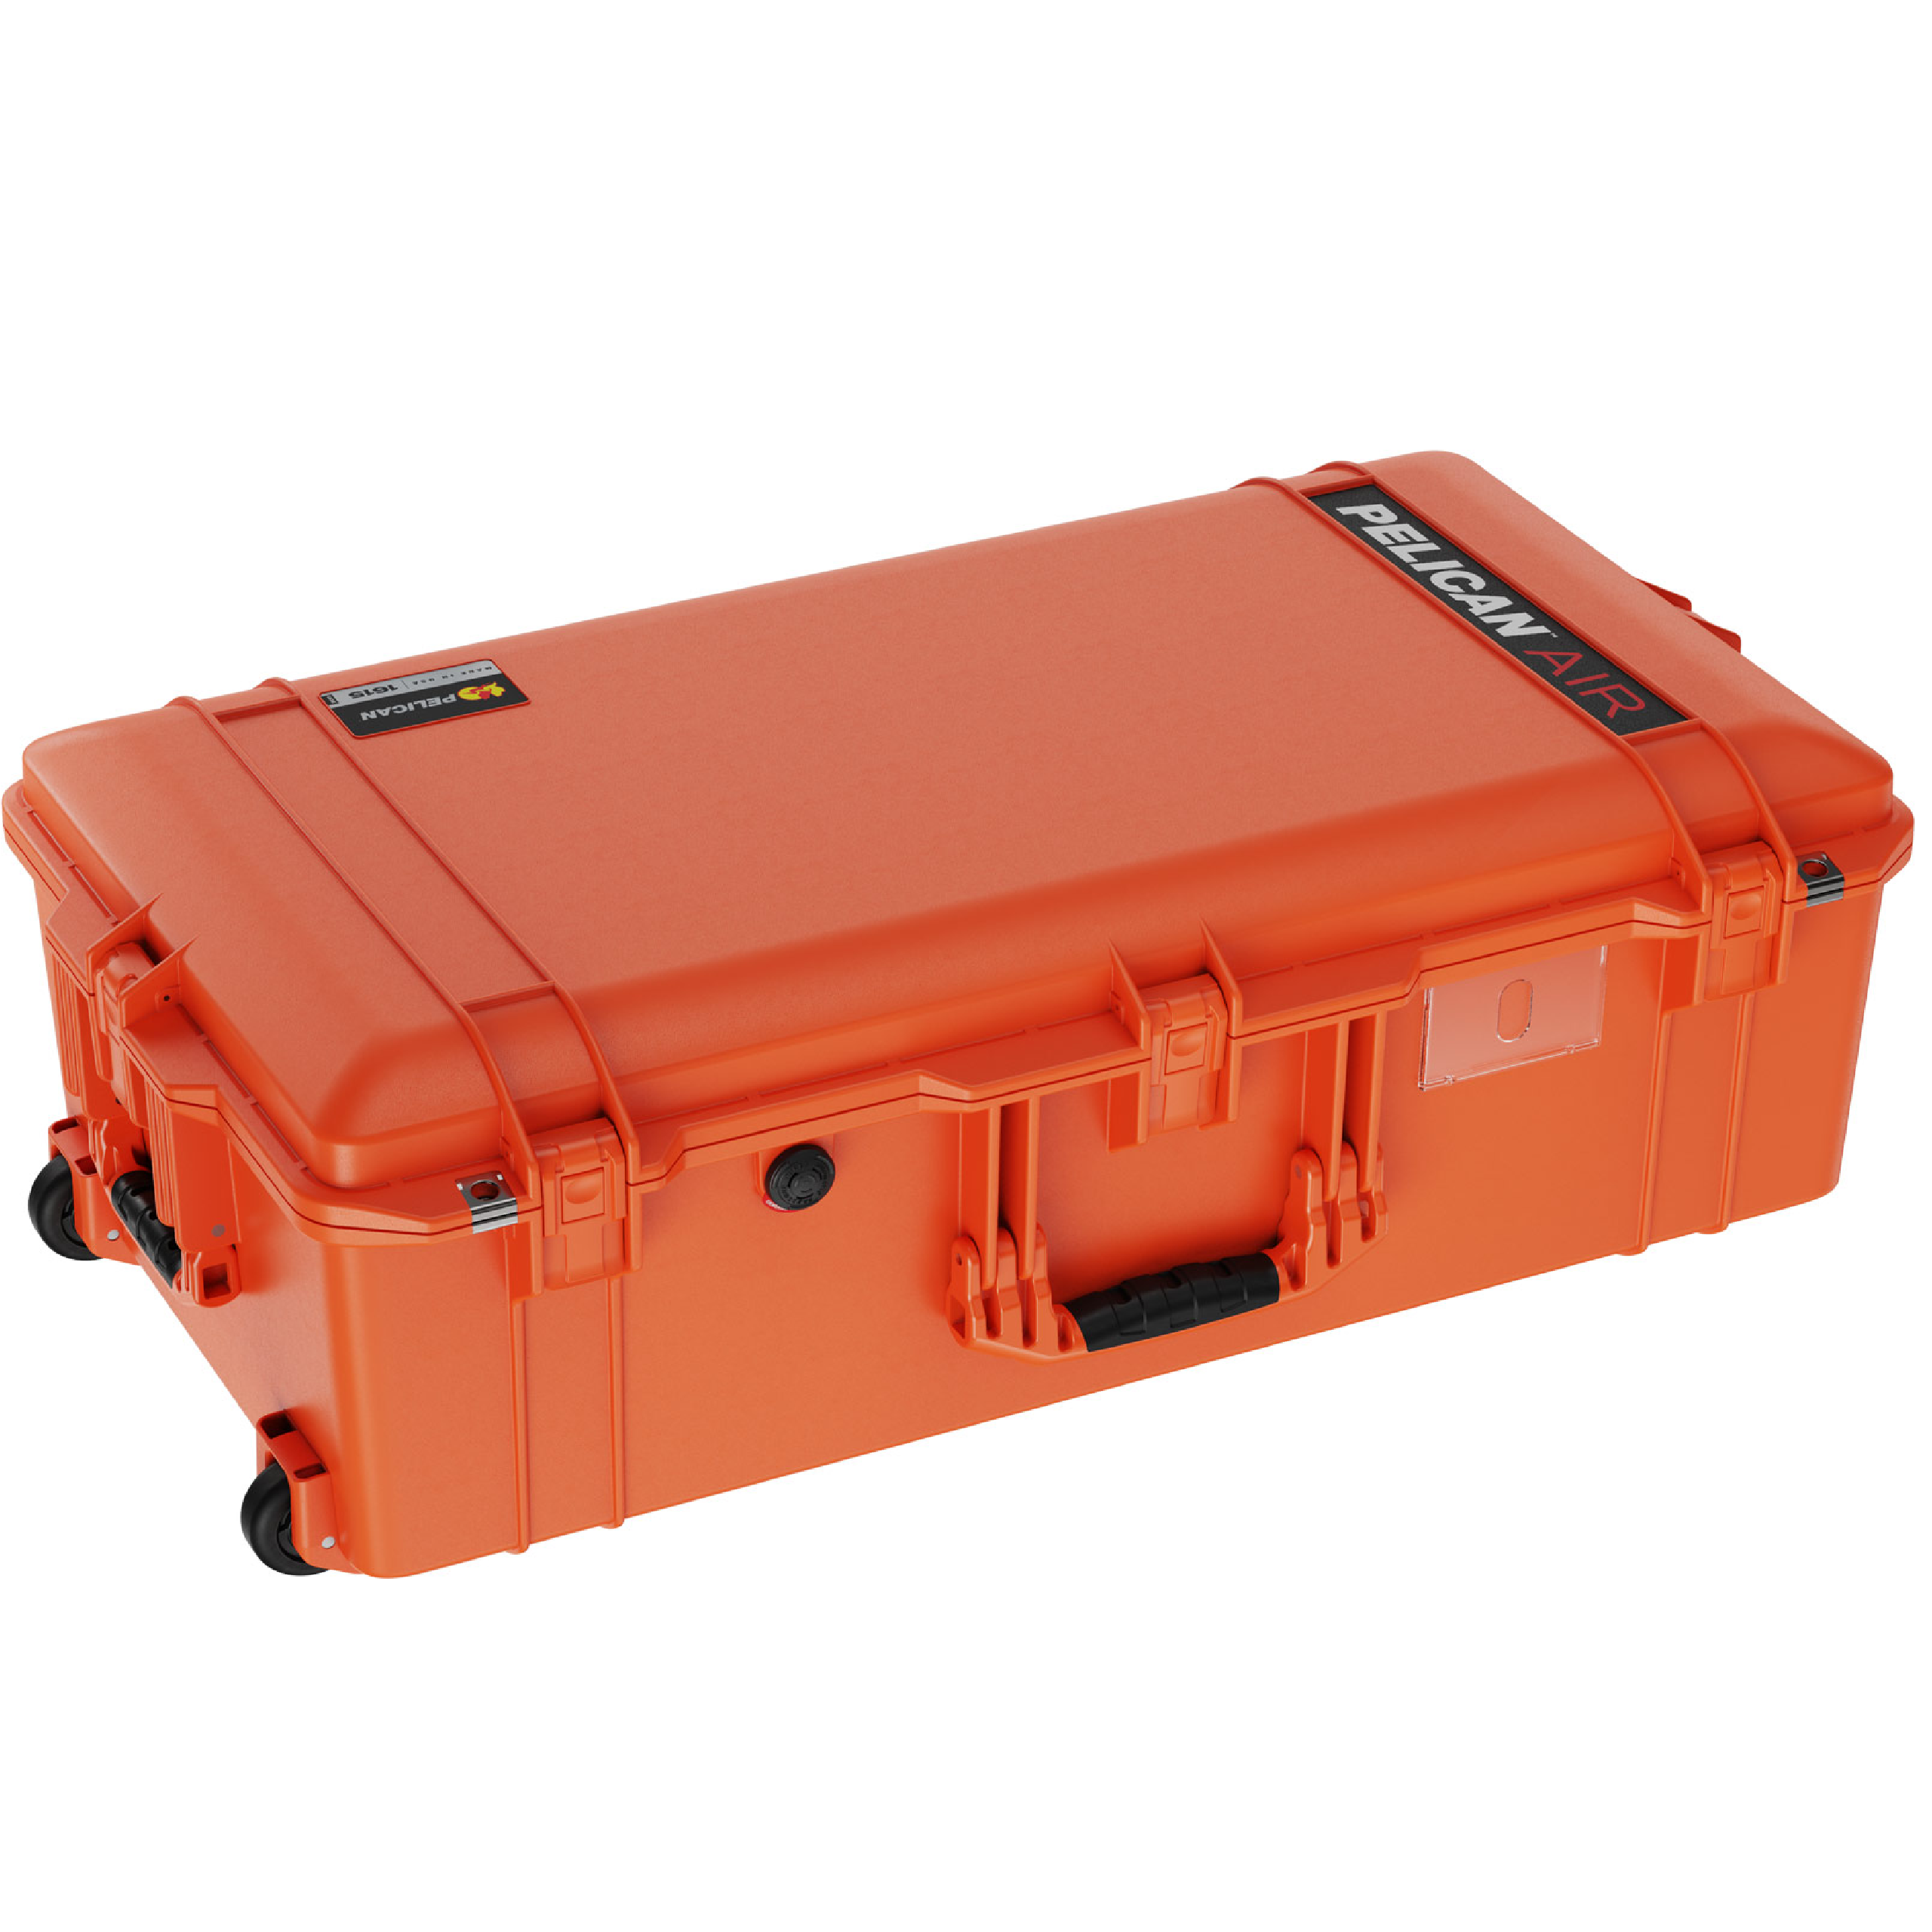 Pelican 1615 Air Case Orange With Internal Foam